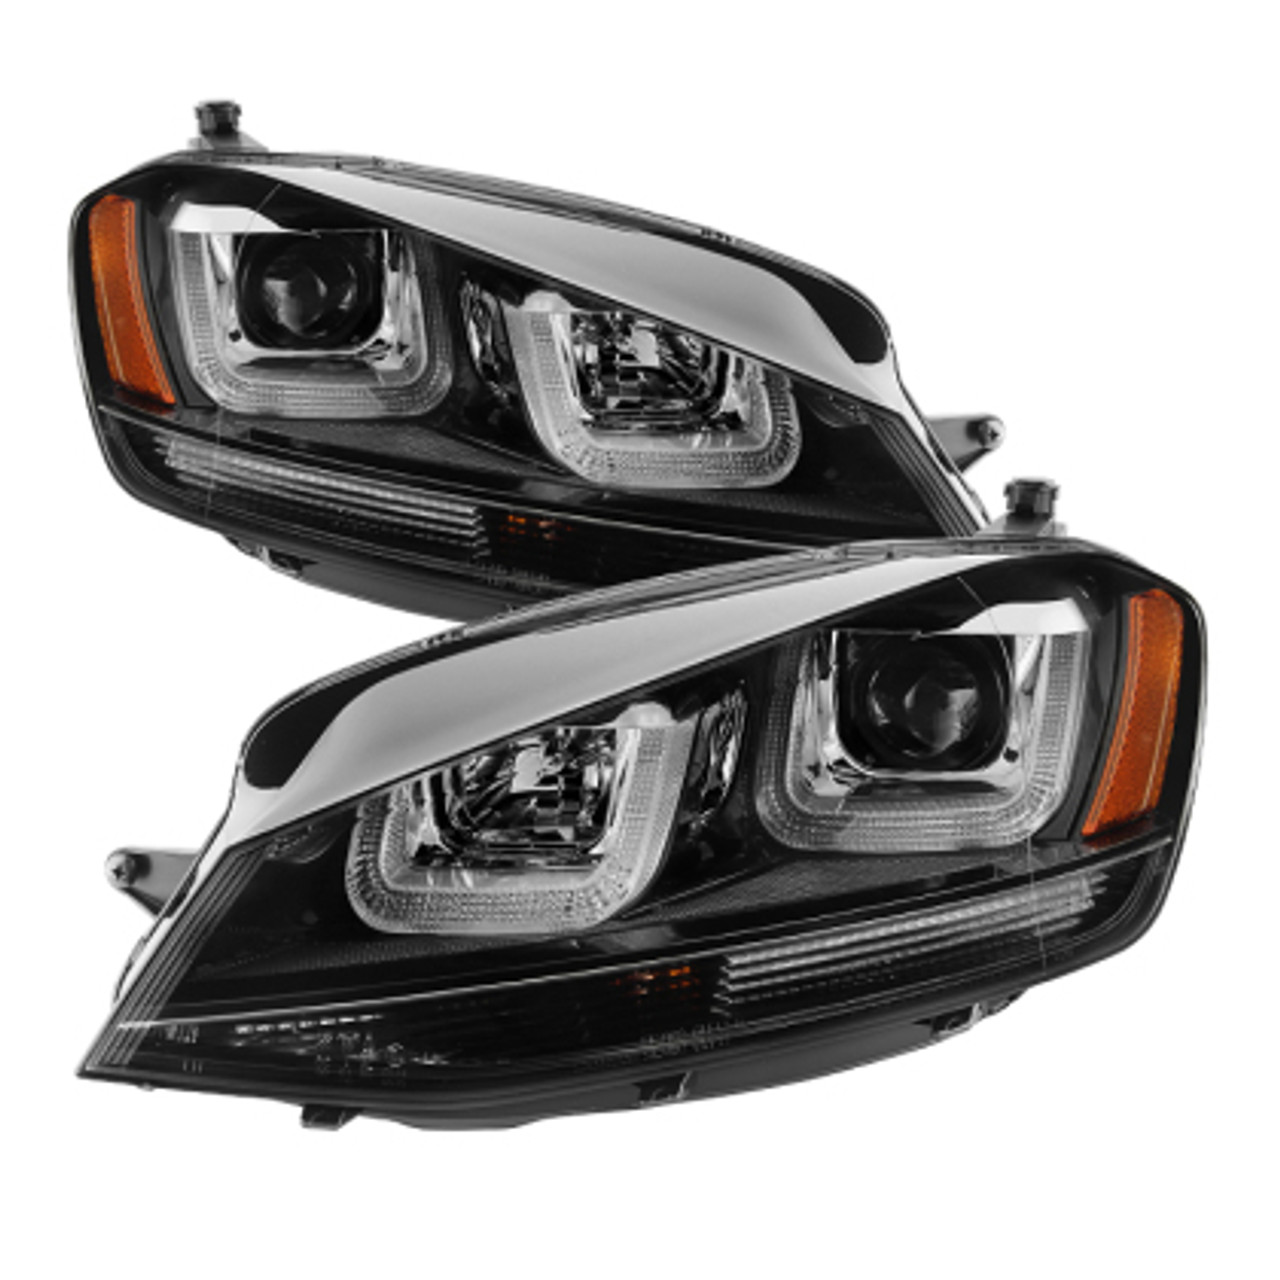 Spyder Black Stripe Projector Headlights for MK7 Golf & GTI (Halogen Models Only)